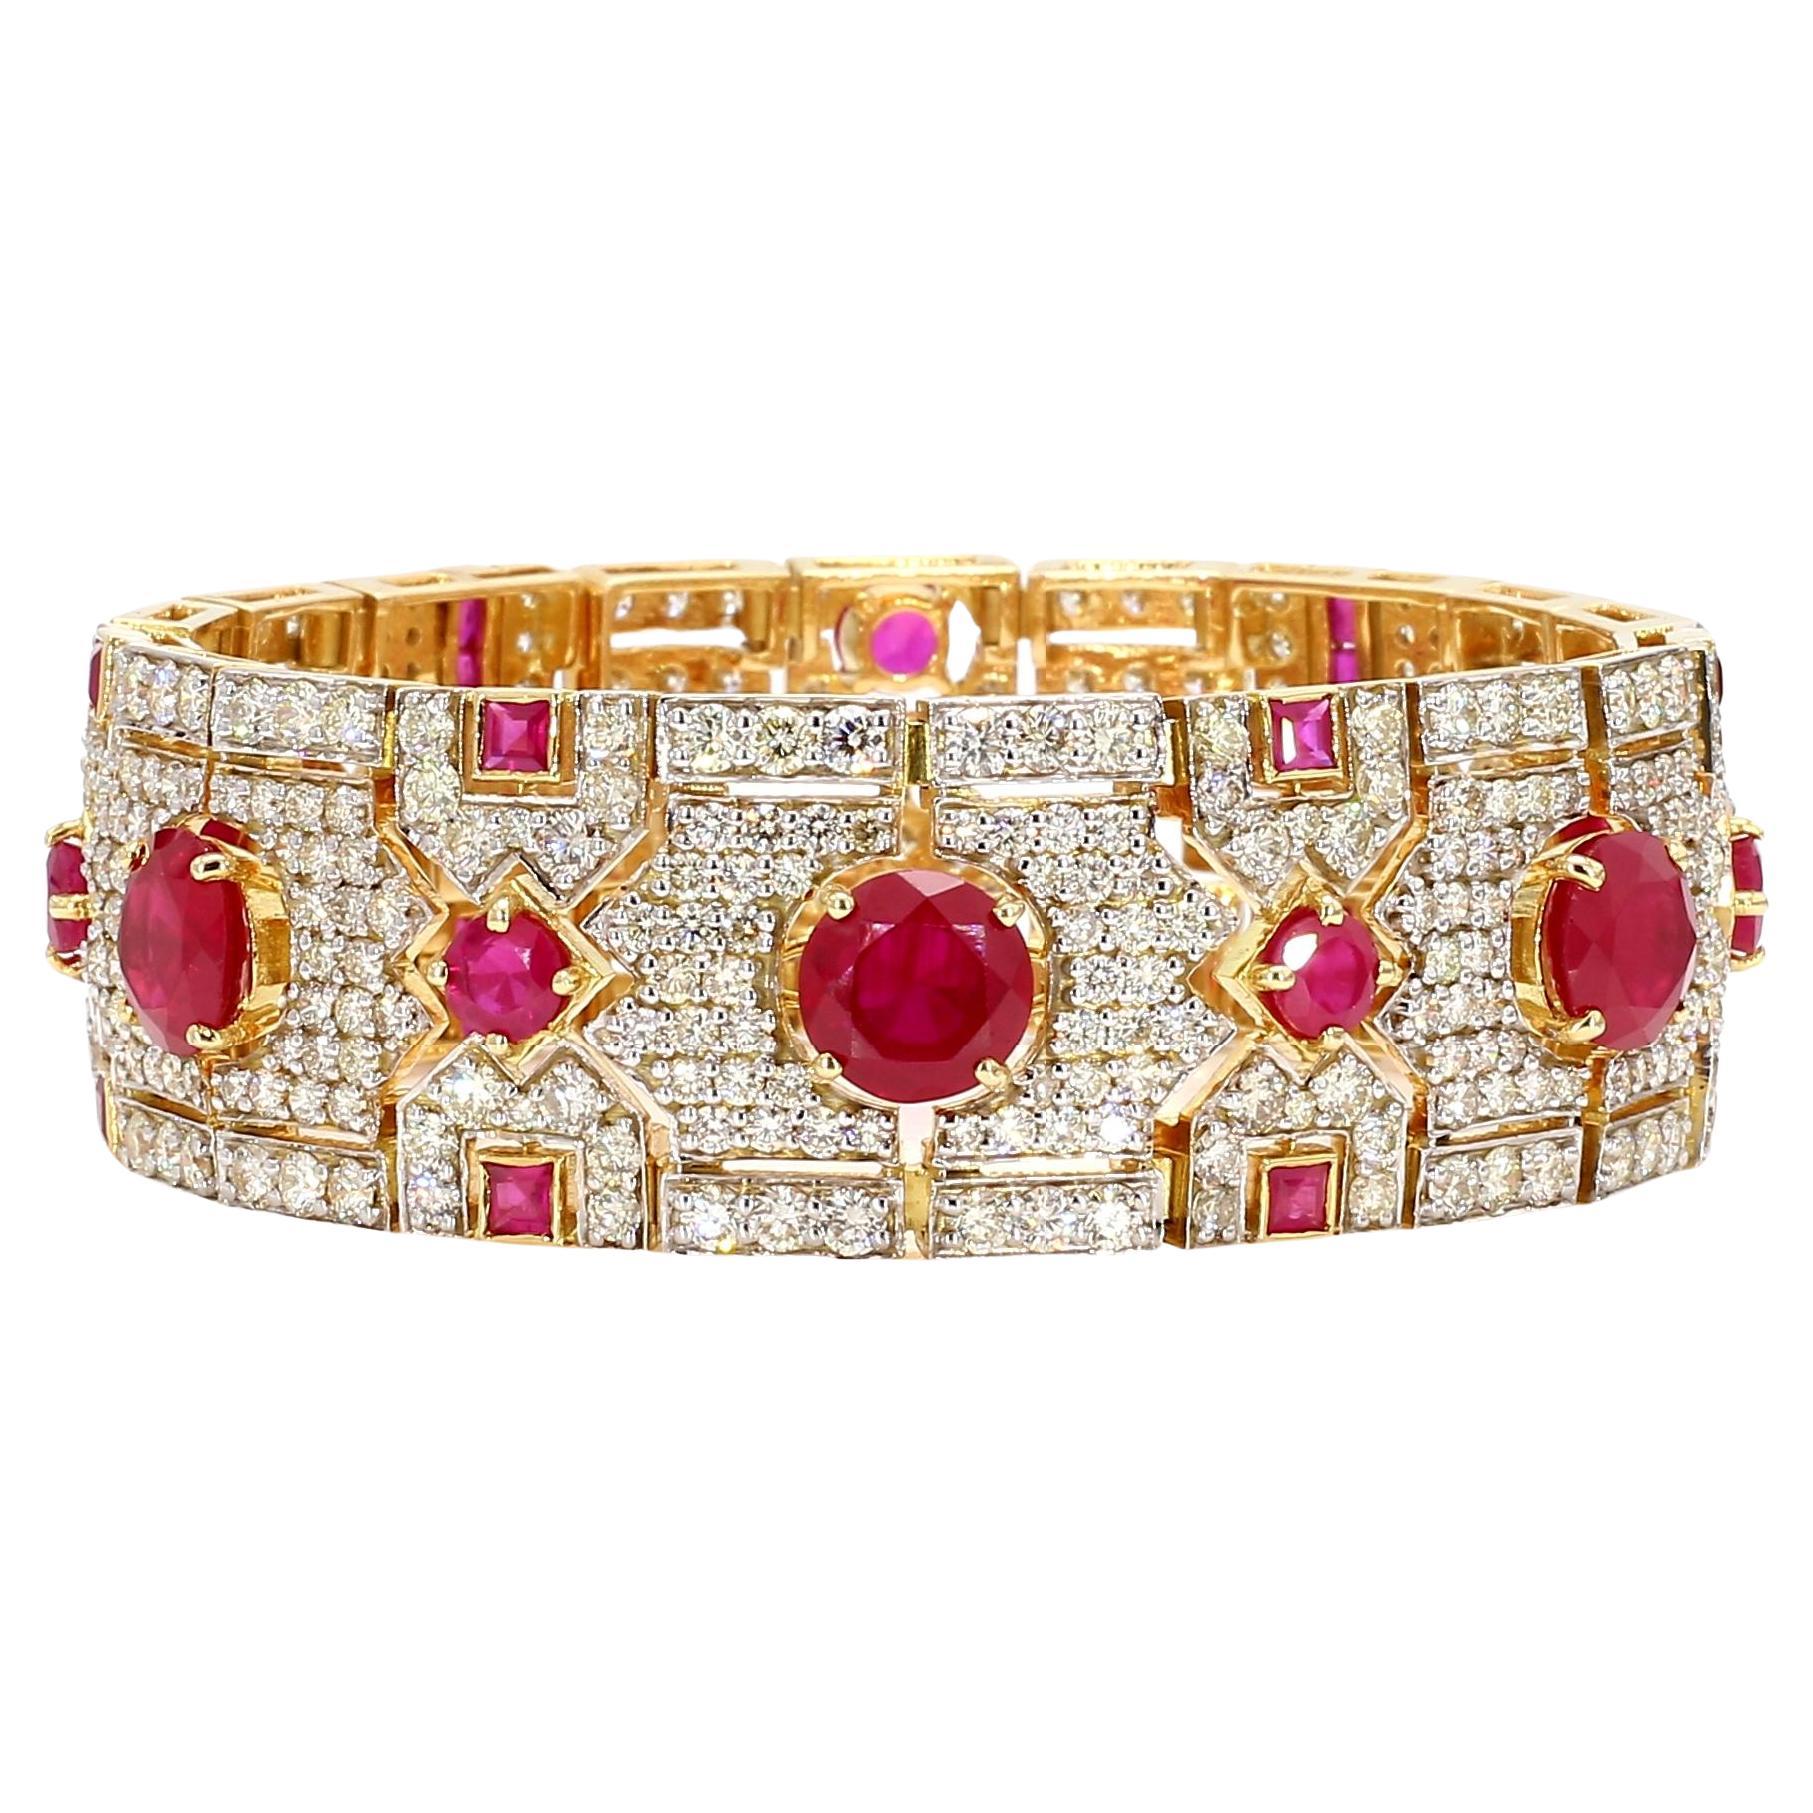 13.25 Carat Diamond 16.59 Carat Ruby Bracelet 18K White Gold For Sale